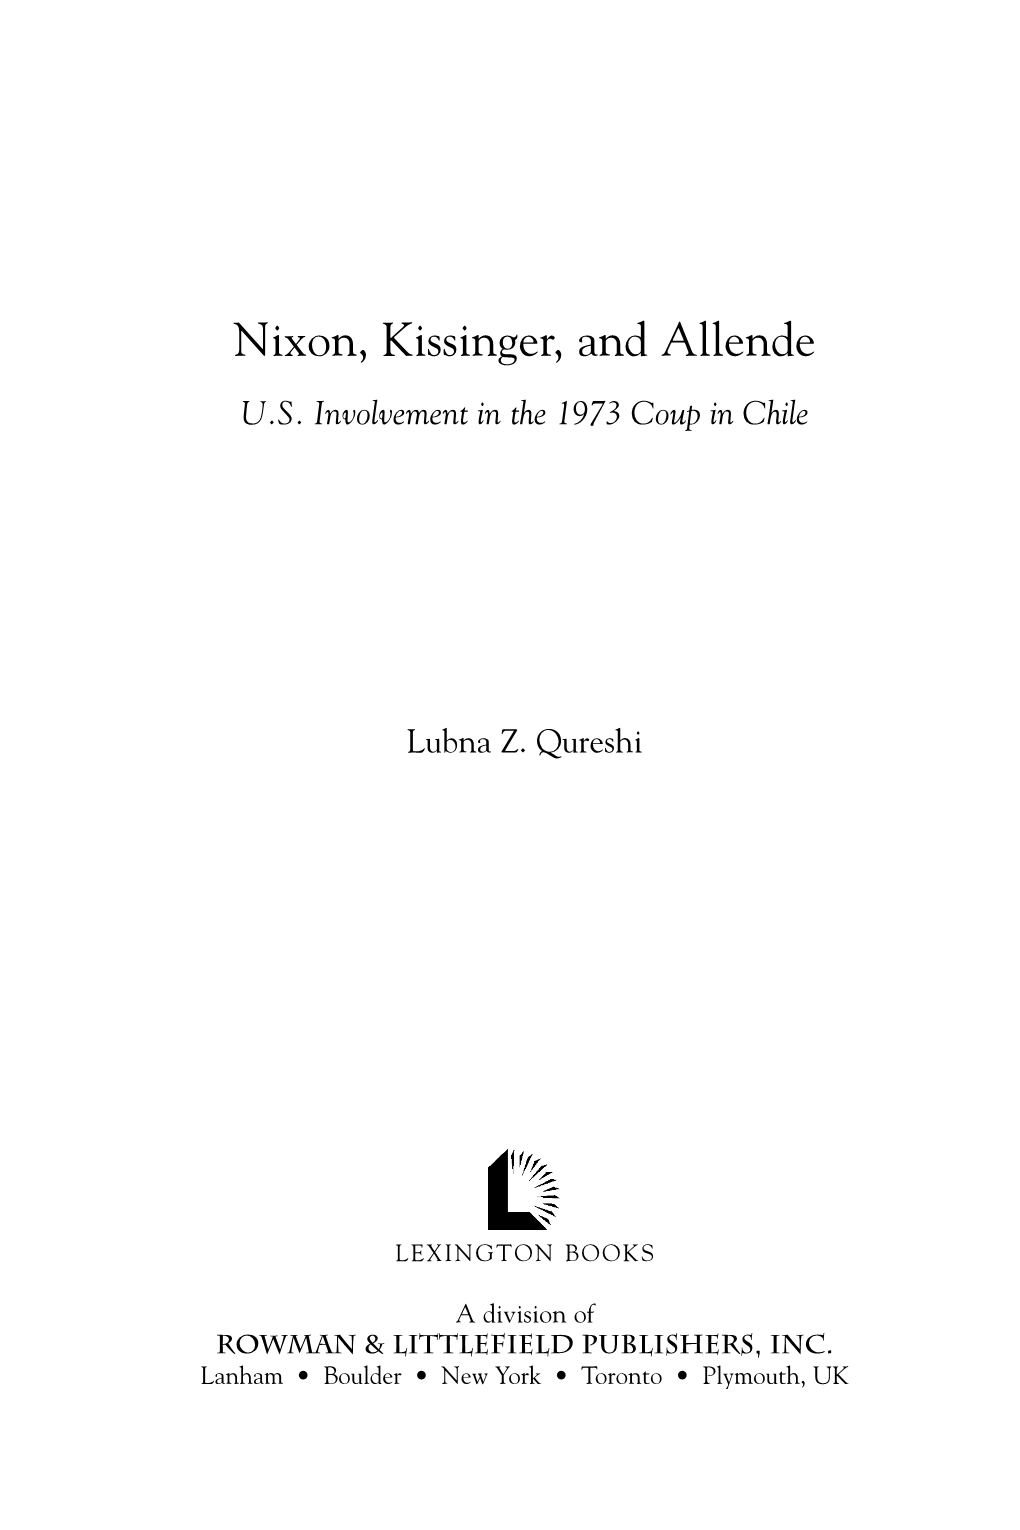 Nixon, Kissinger, and Allende U.S